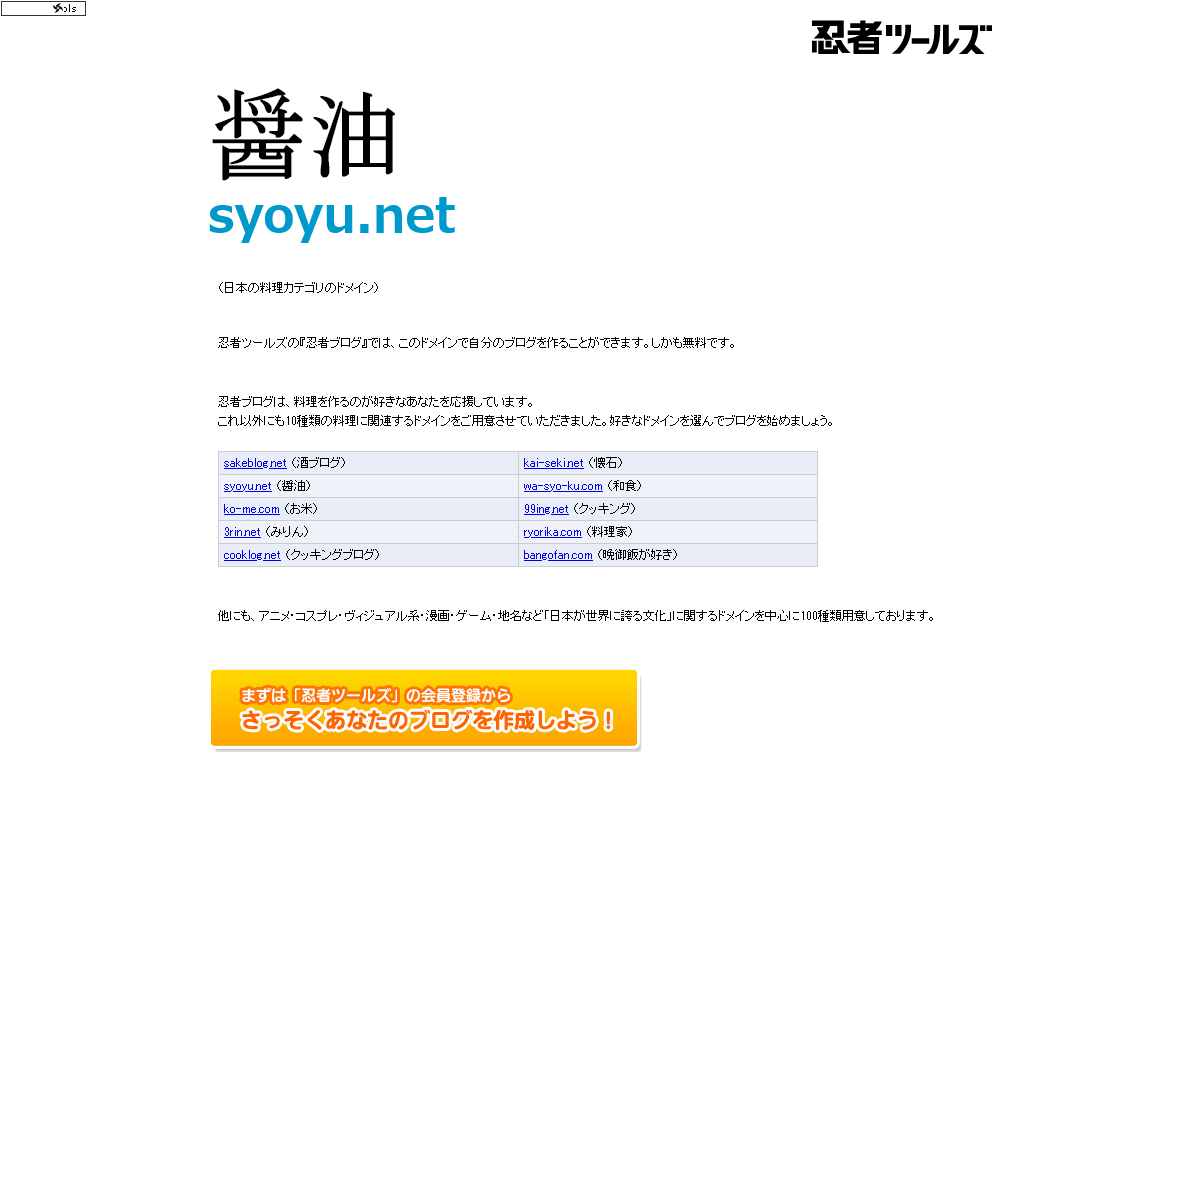 A complete backup of syoyu.net